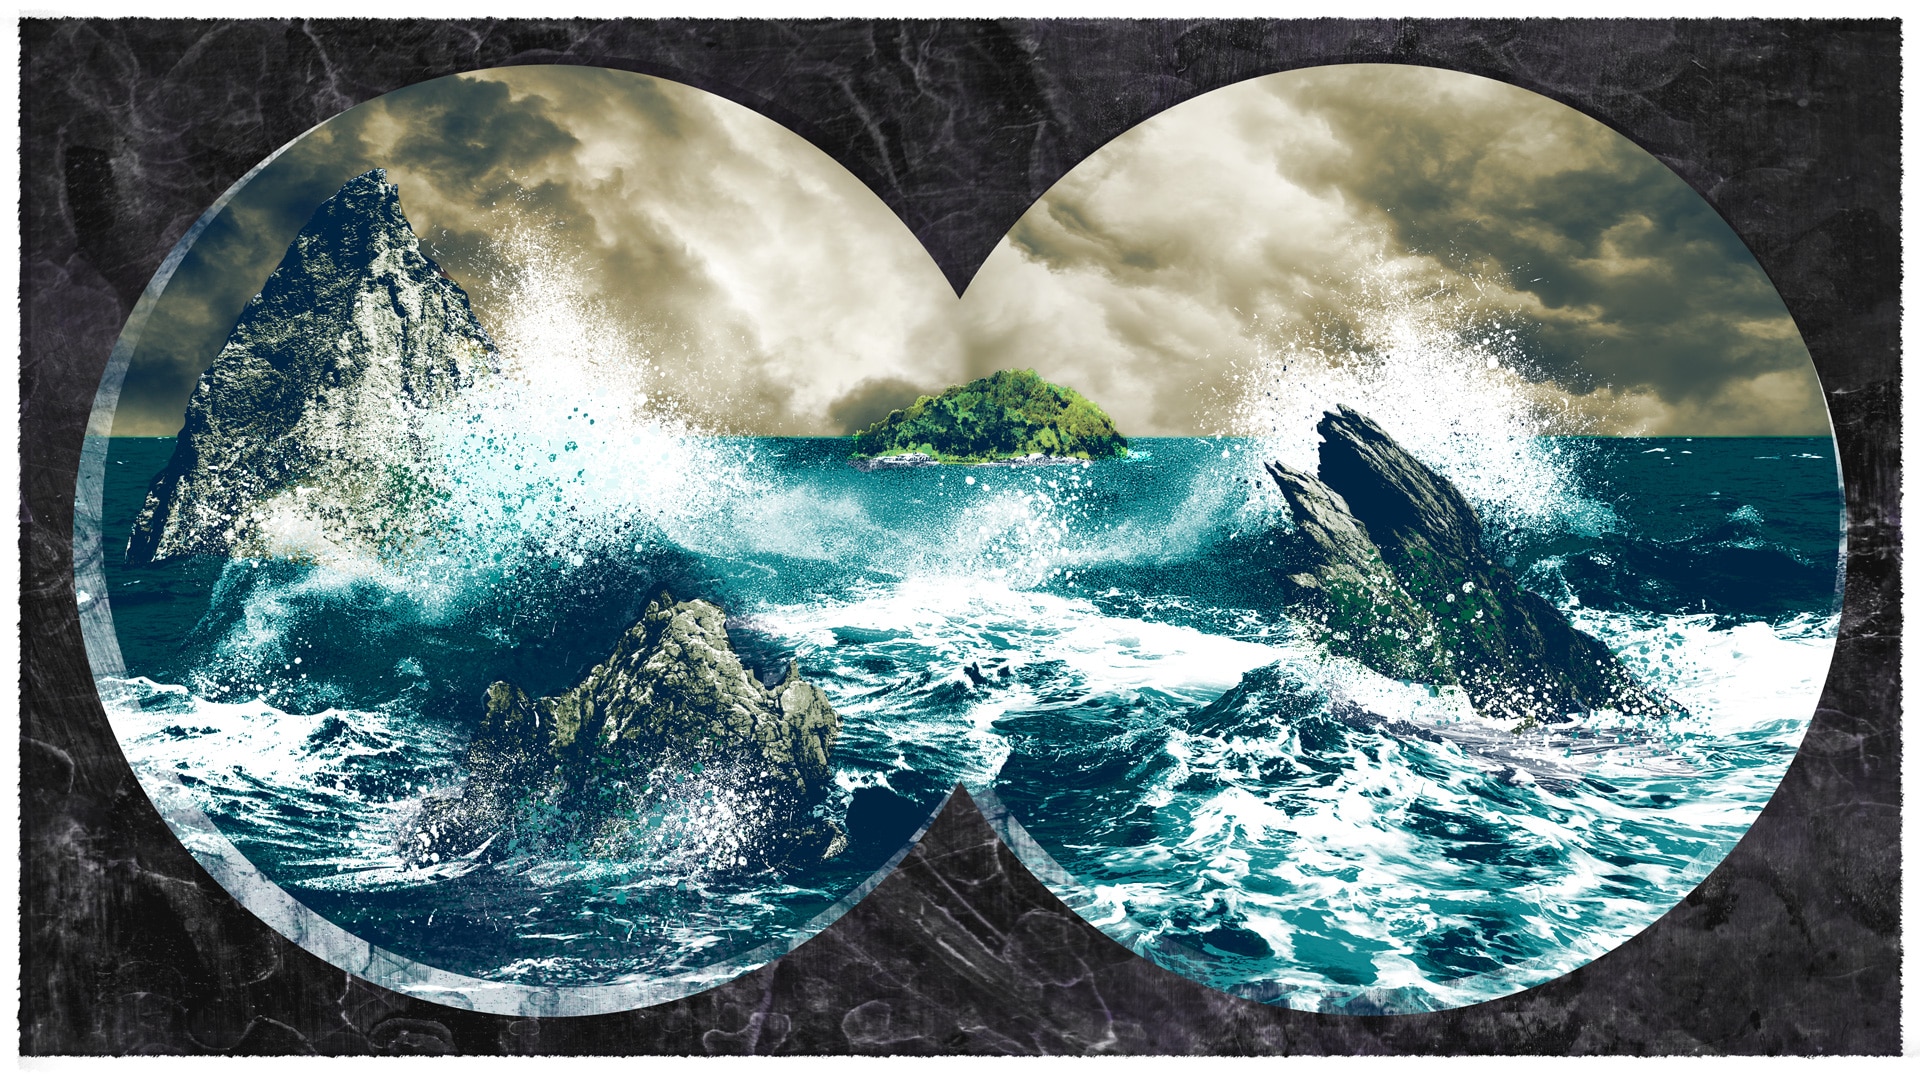 Illustration of crashing waves and a turbulent sky as if seen through binoculars.